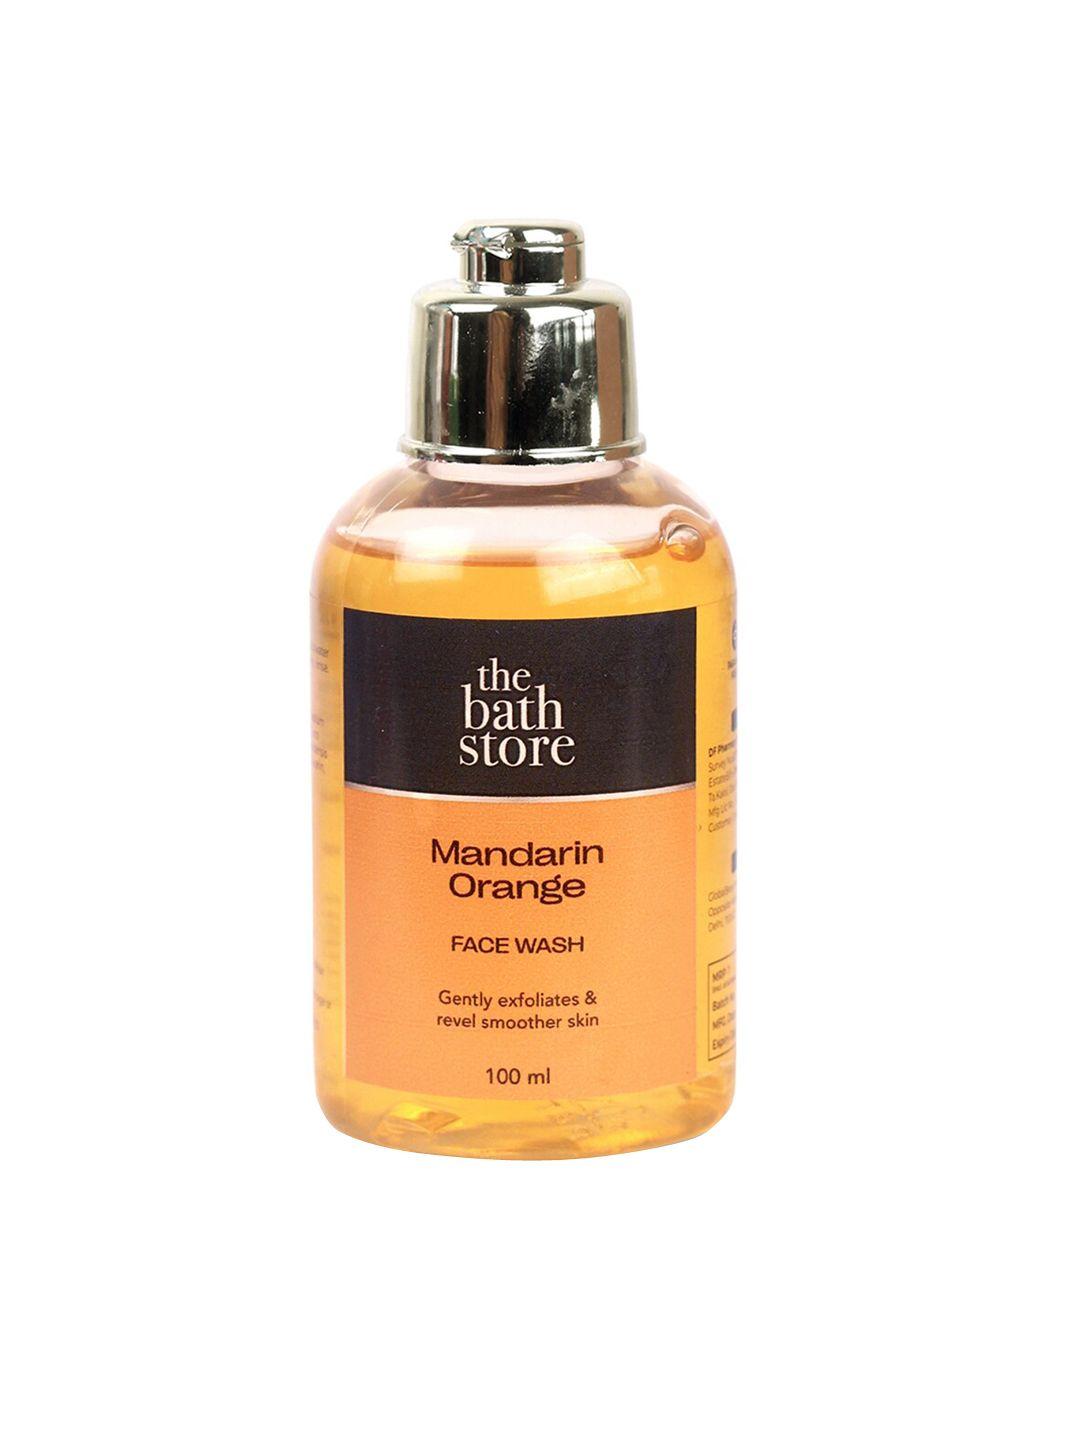 the bath store mandarin orange face wash to gently exfoliate & revel smoother skin - 100ml